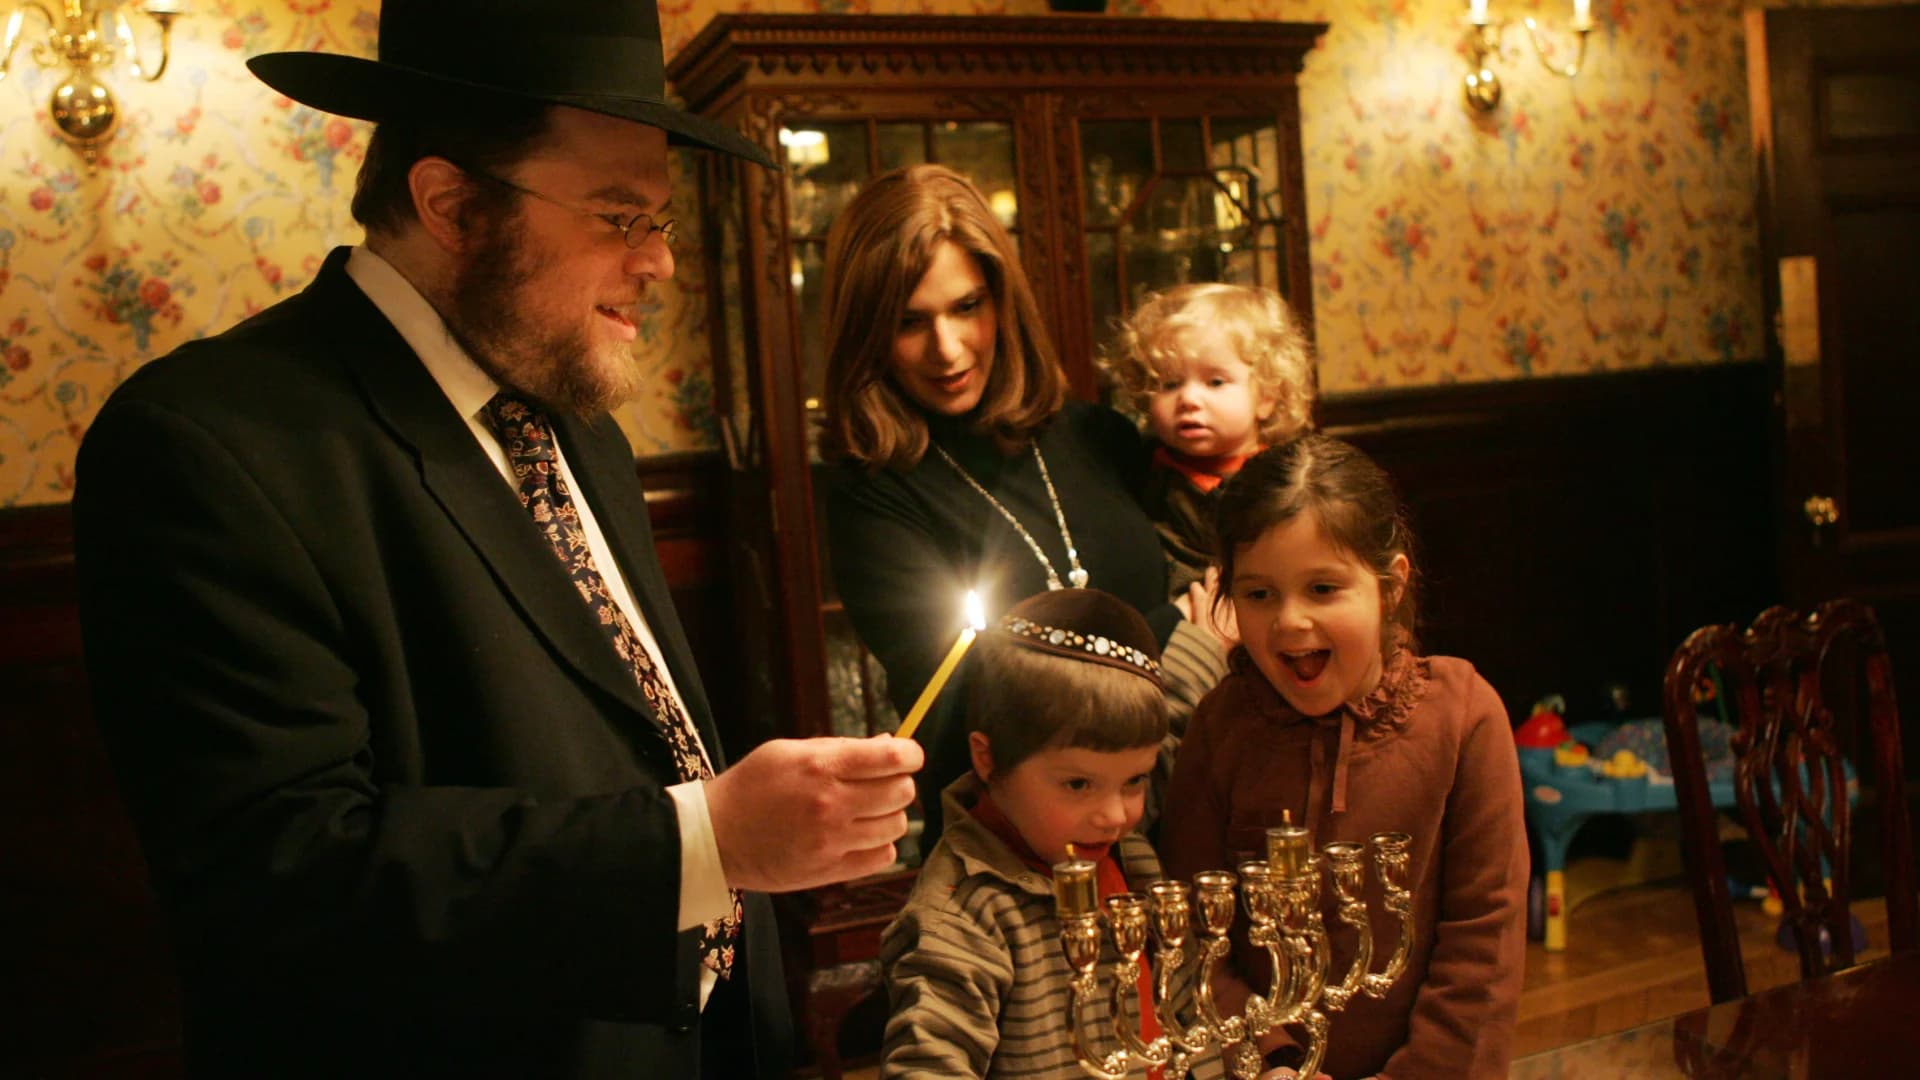 Guide: Fun ways to celebrate Hanukkah with children